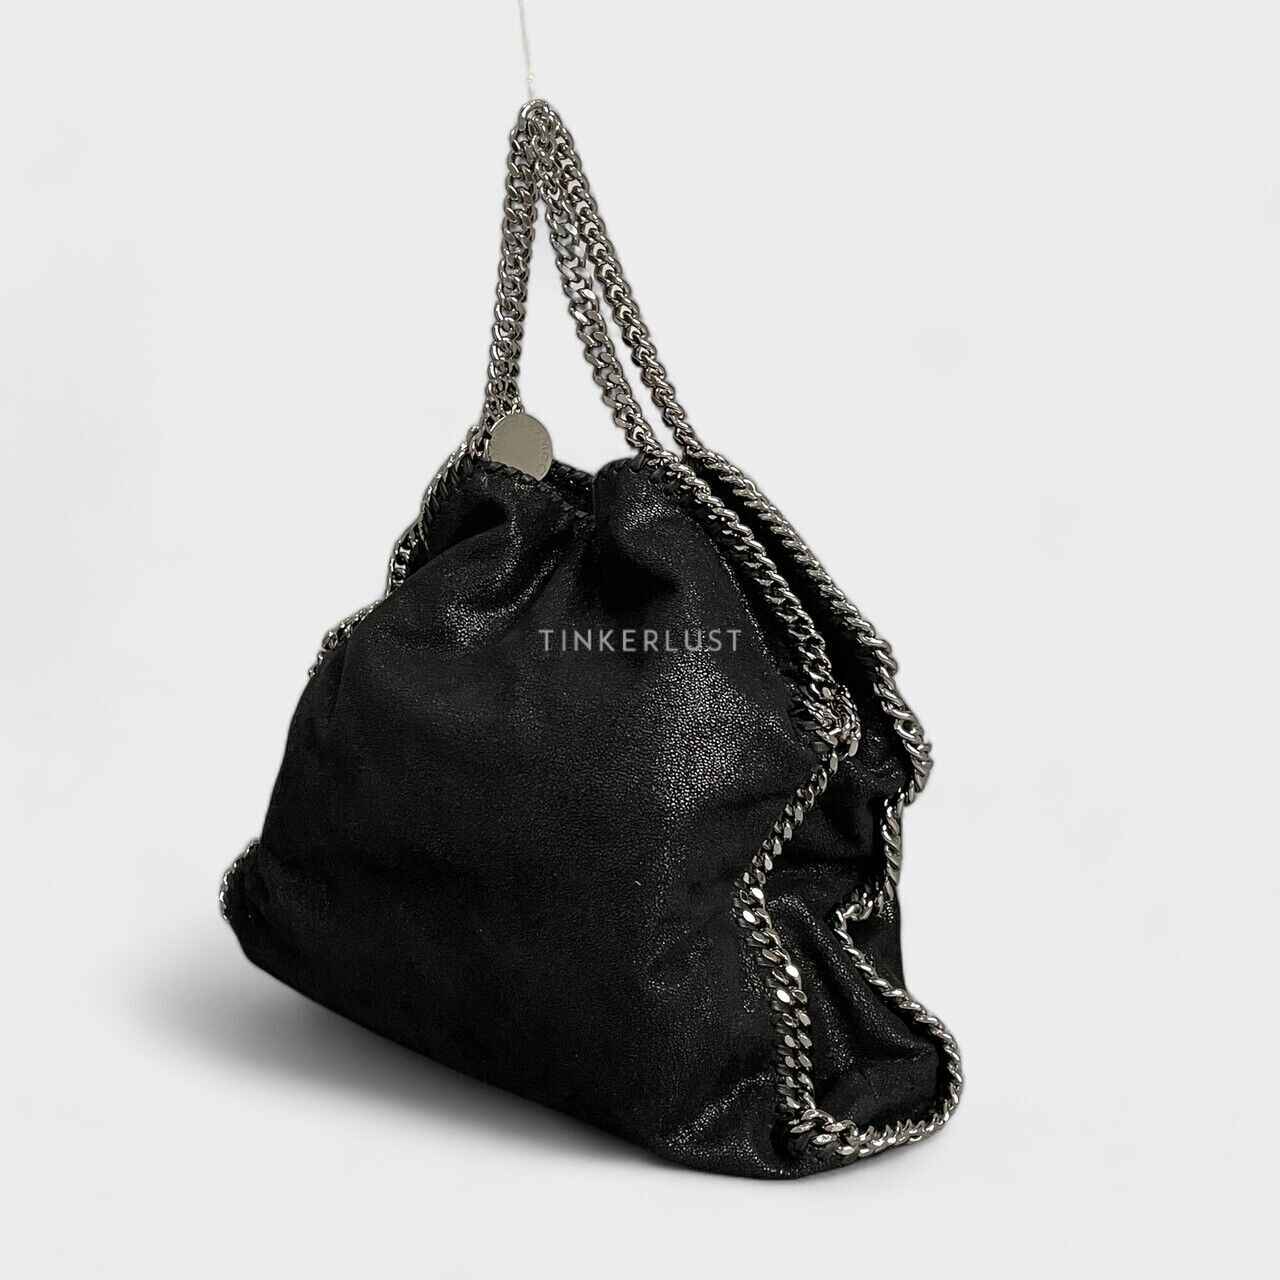 Stella McCartney Black Falabella Mini Tote Bag